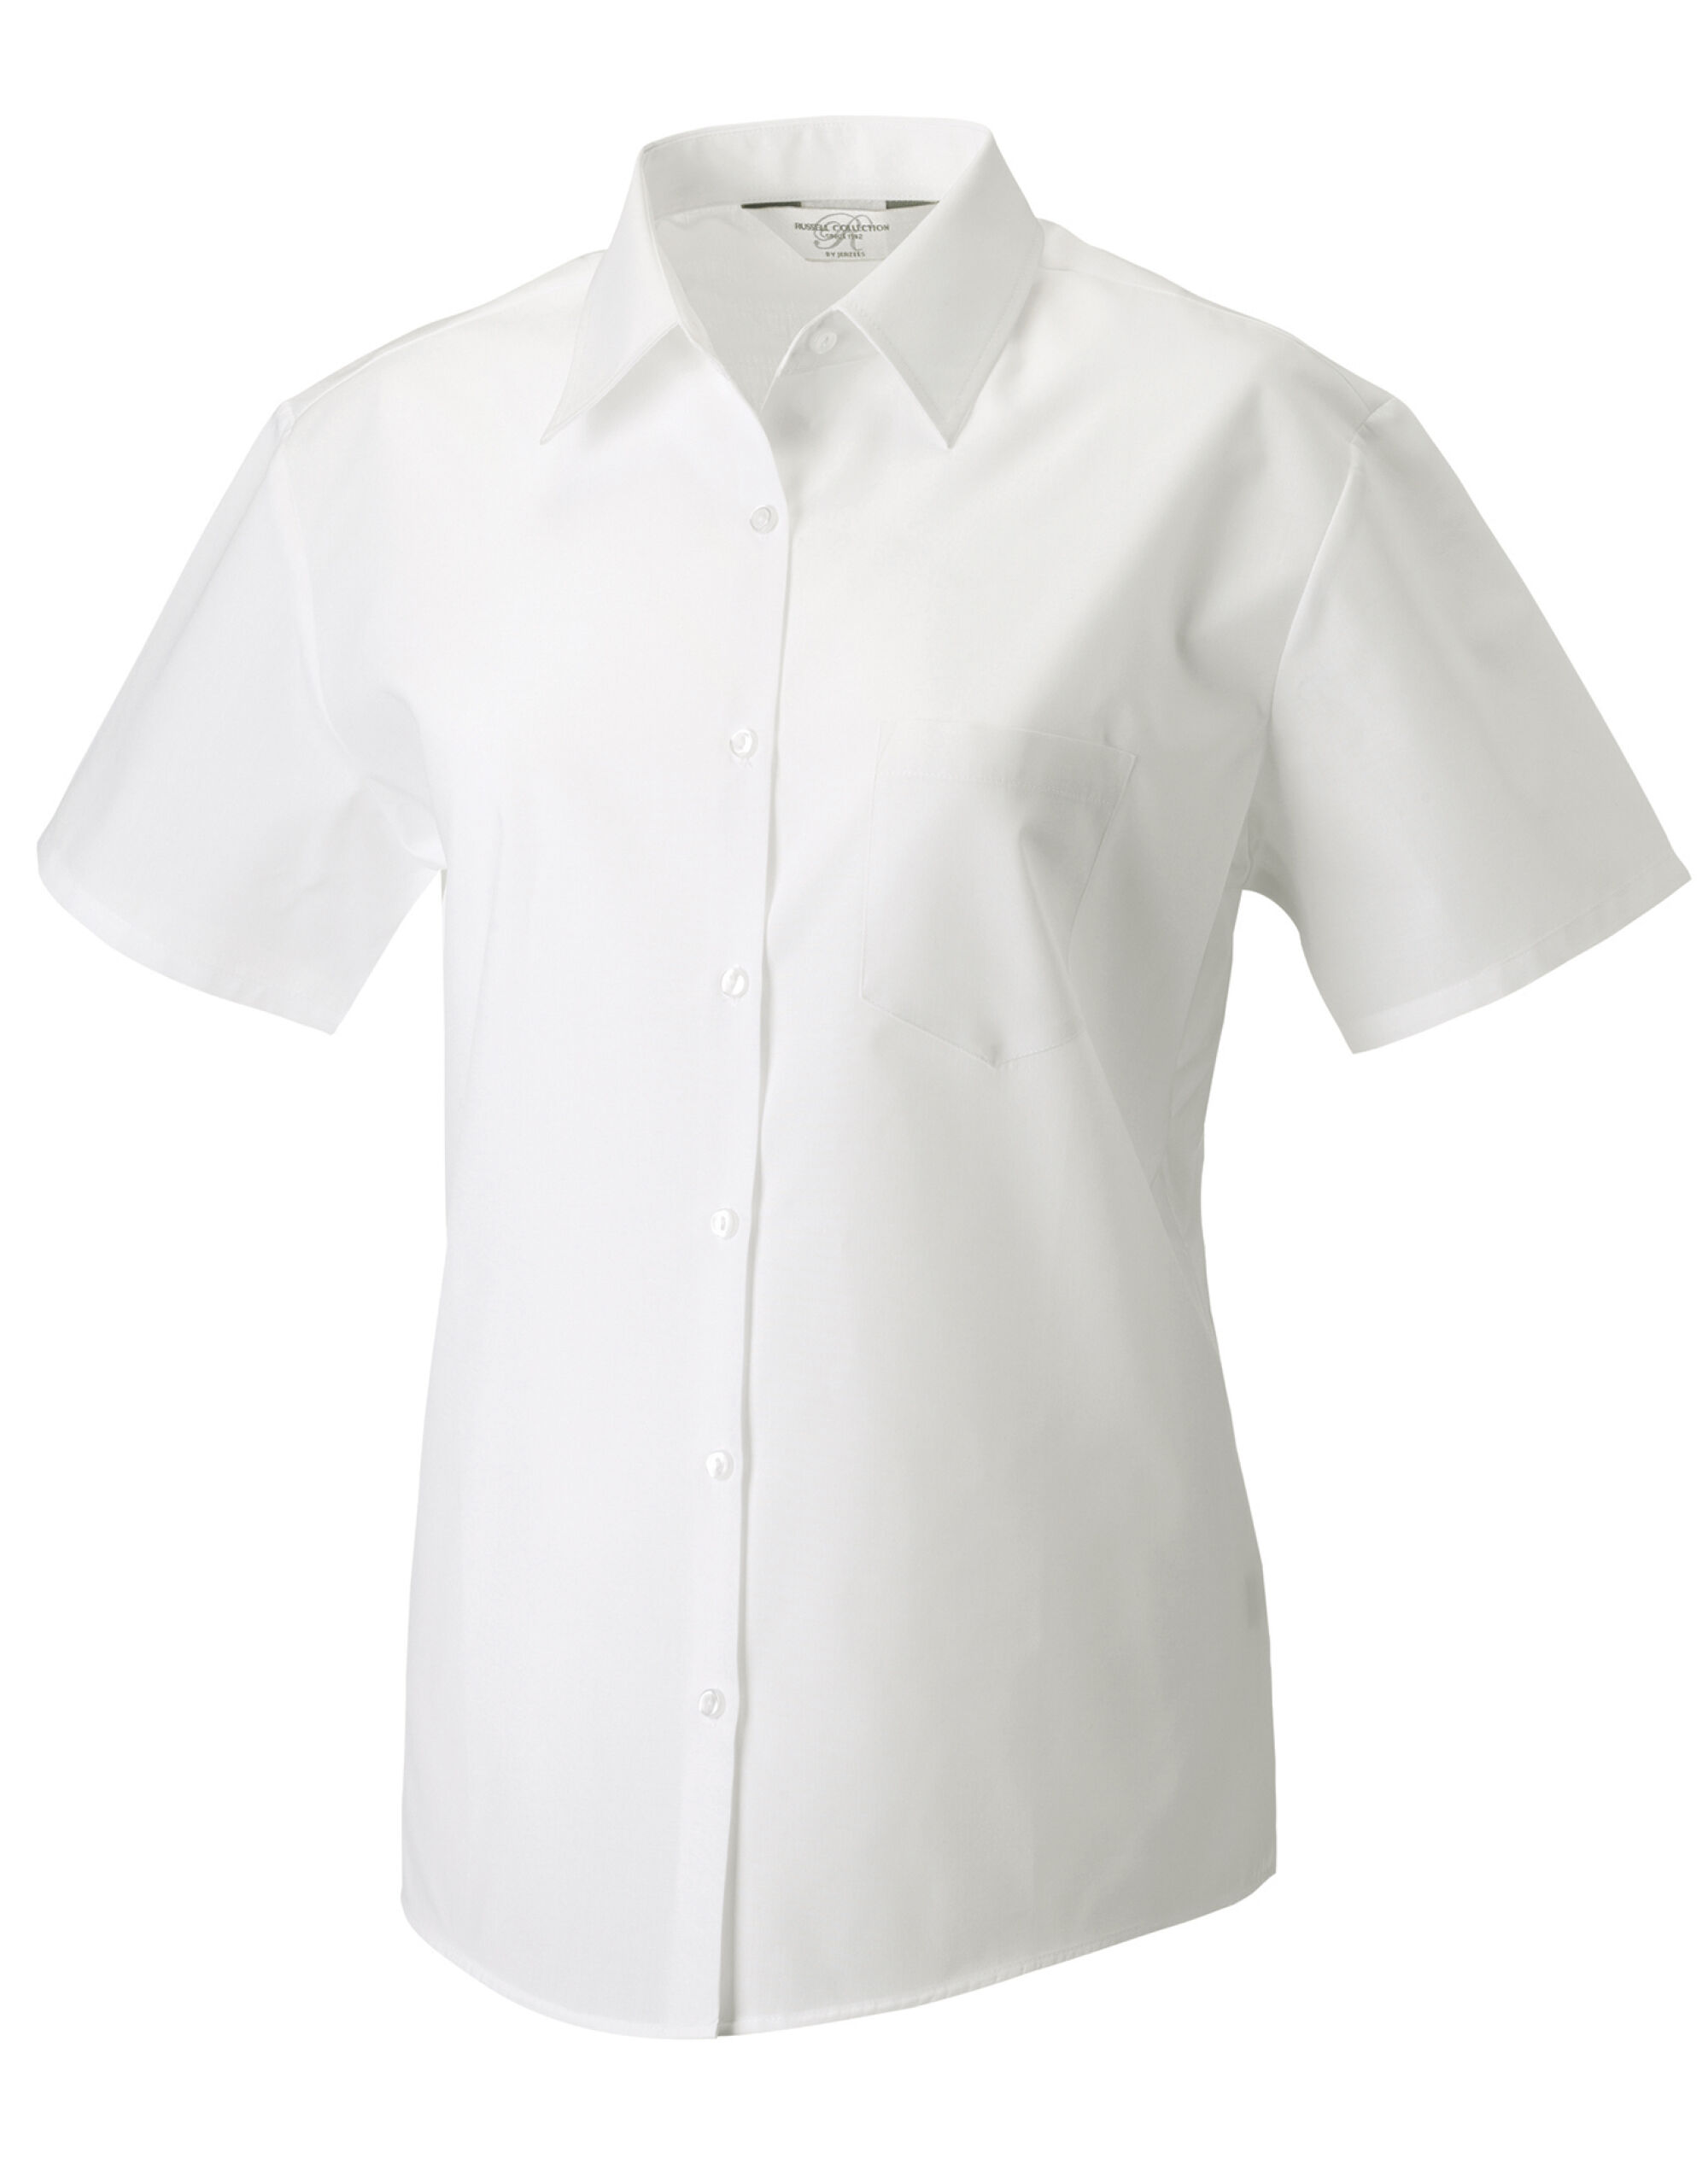 Ladies' Short Sleeve Polycotton Easy Care Poplin Shirt